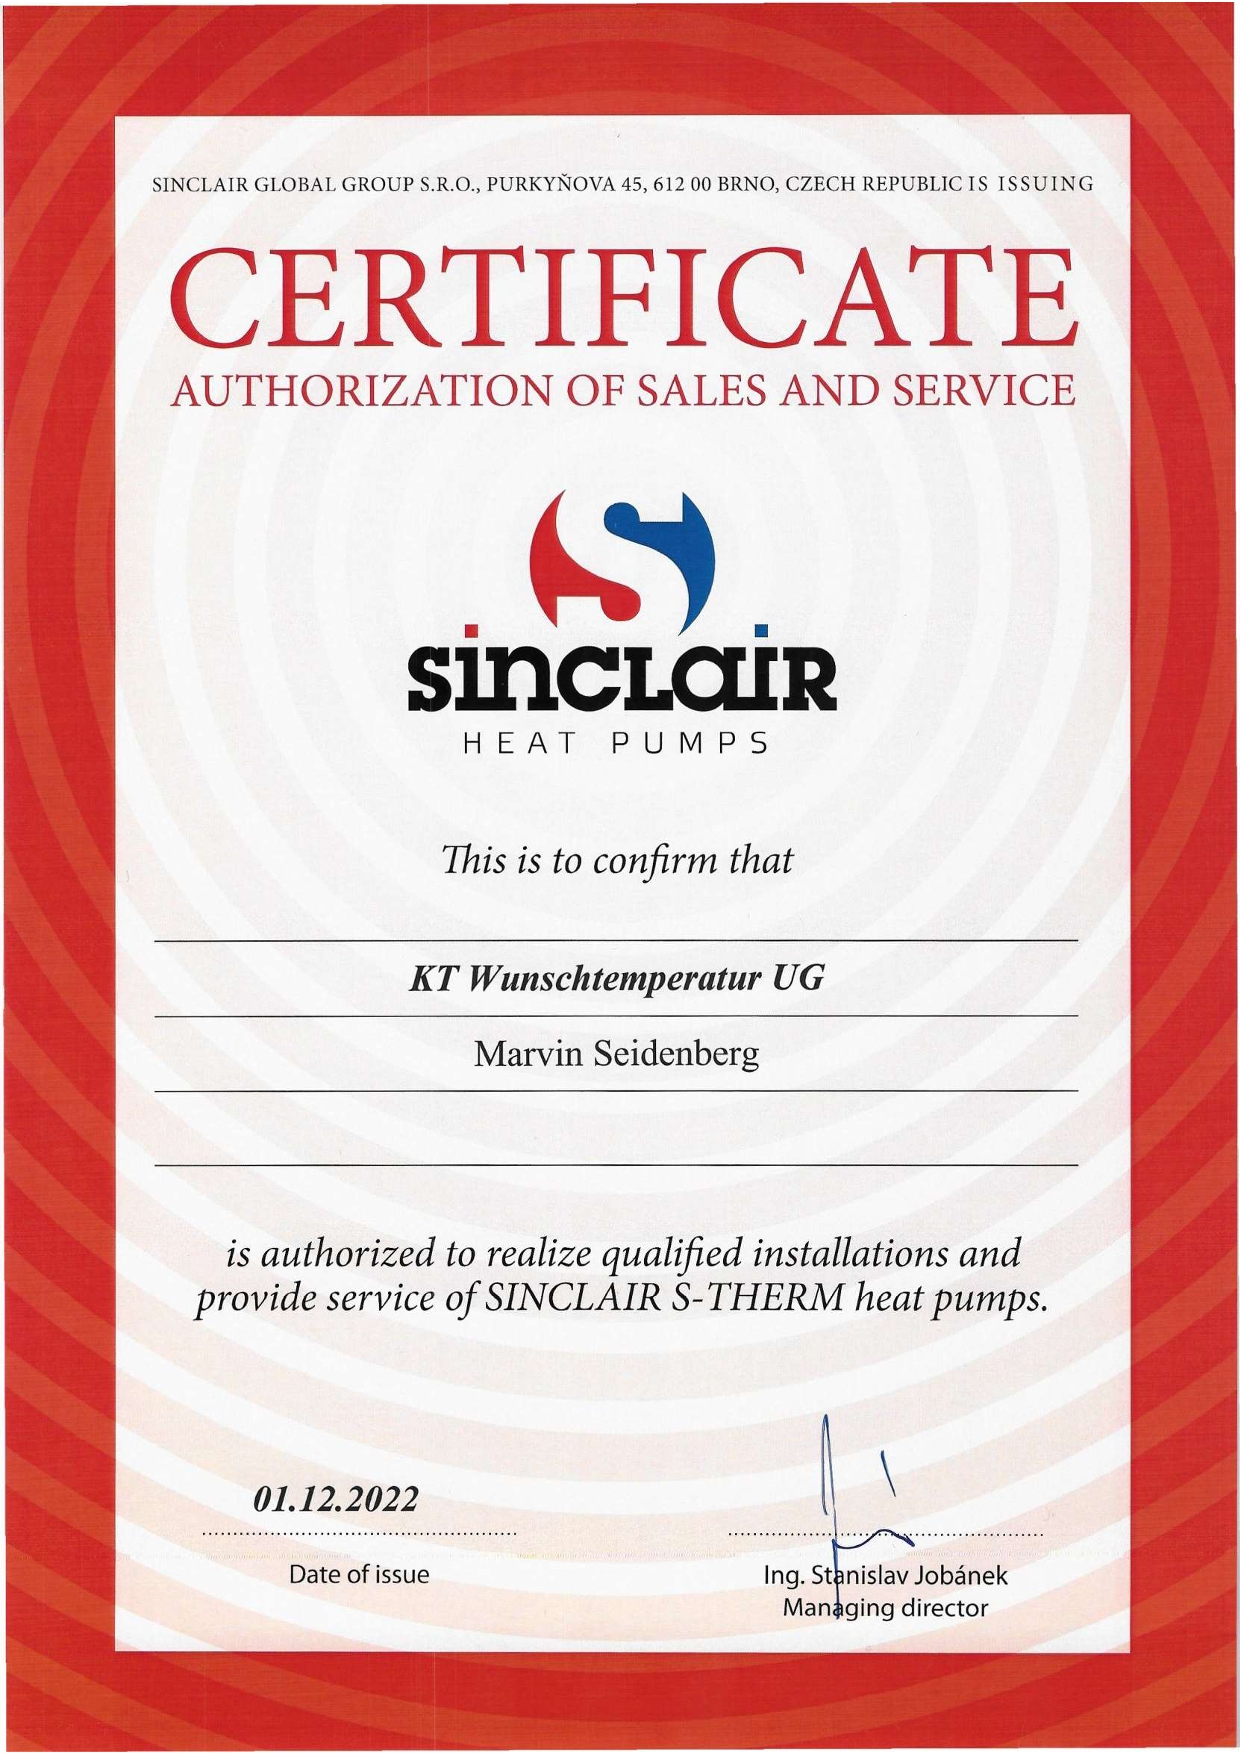 Sinclair_S-Therm_Heat_Pumps_Zertifikat_Marvin_Seidenberg